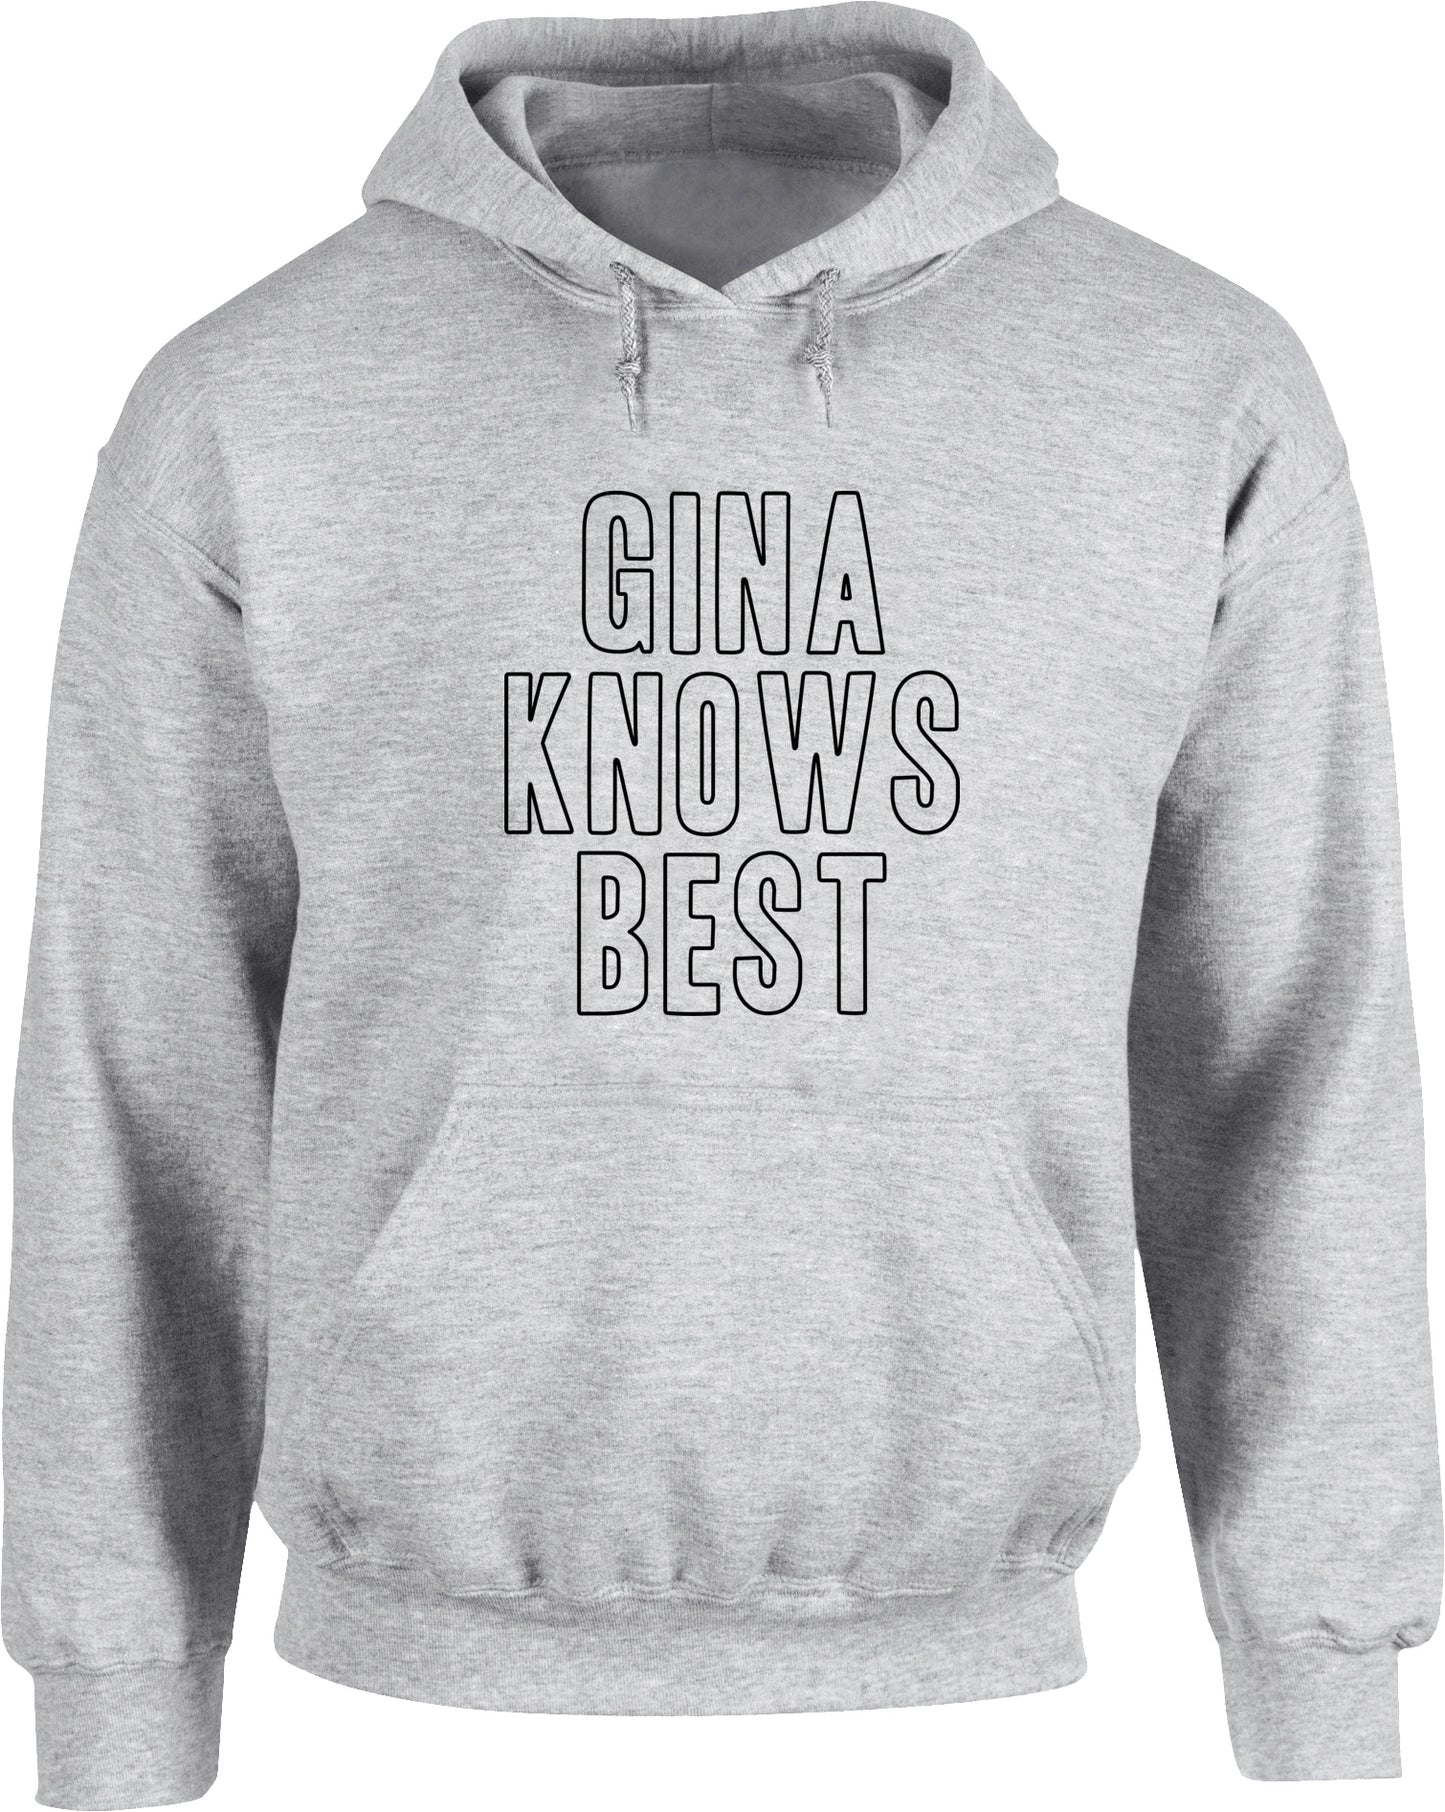 Gina knows best unisex Hoodie hooded top